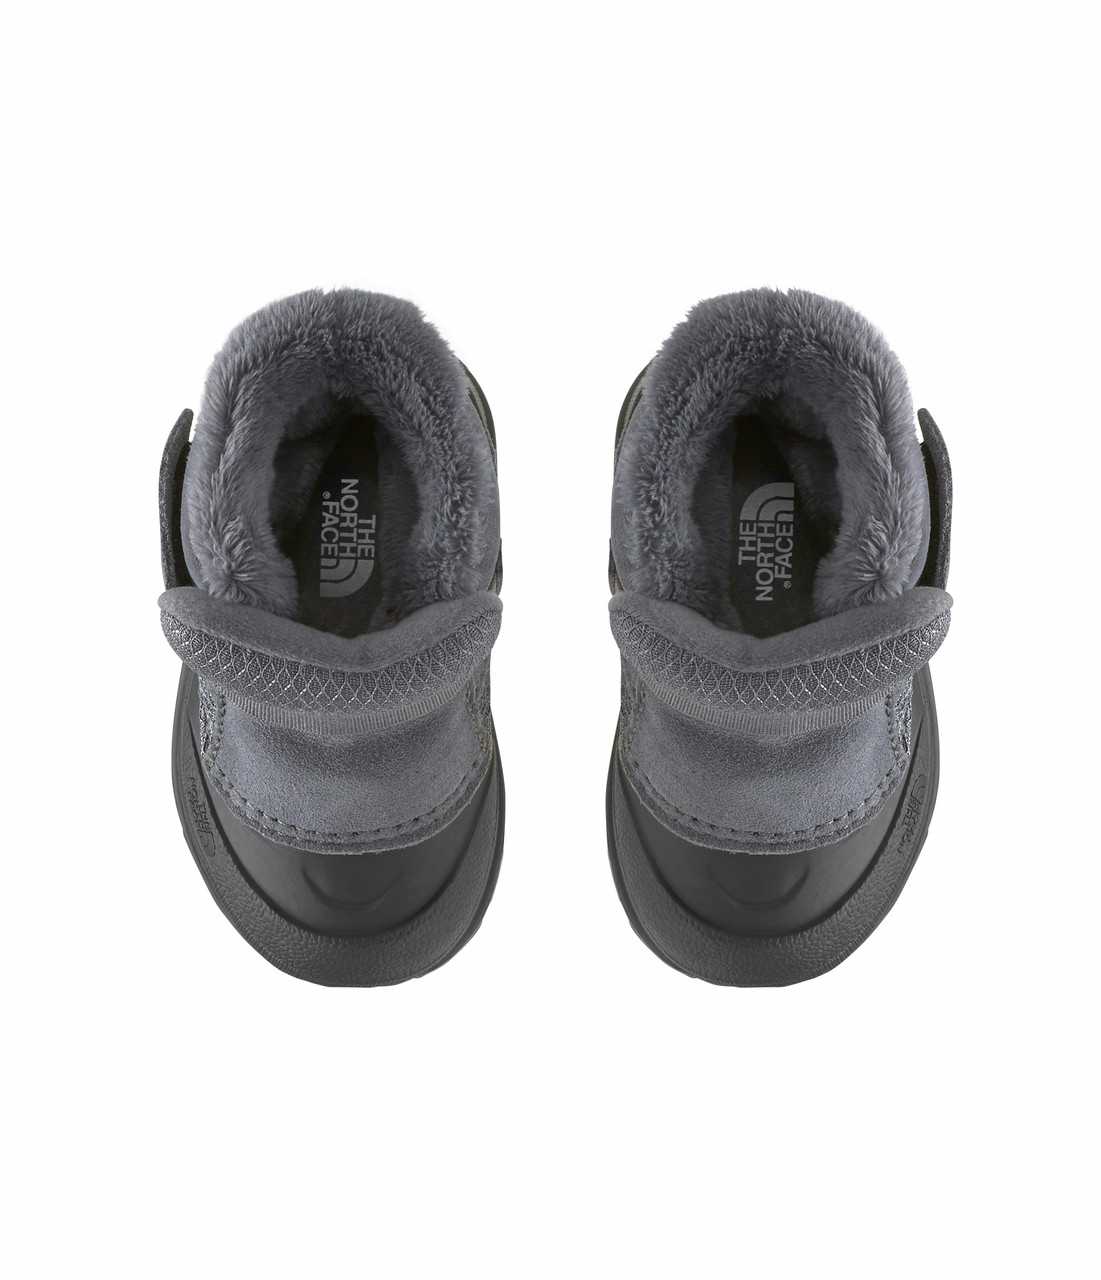 Alpenglow II Winter Boots TNF Black/Zinc Grey